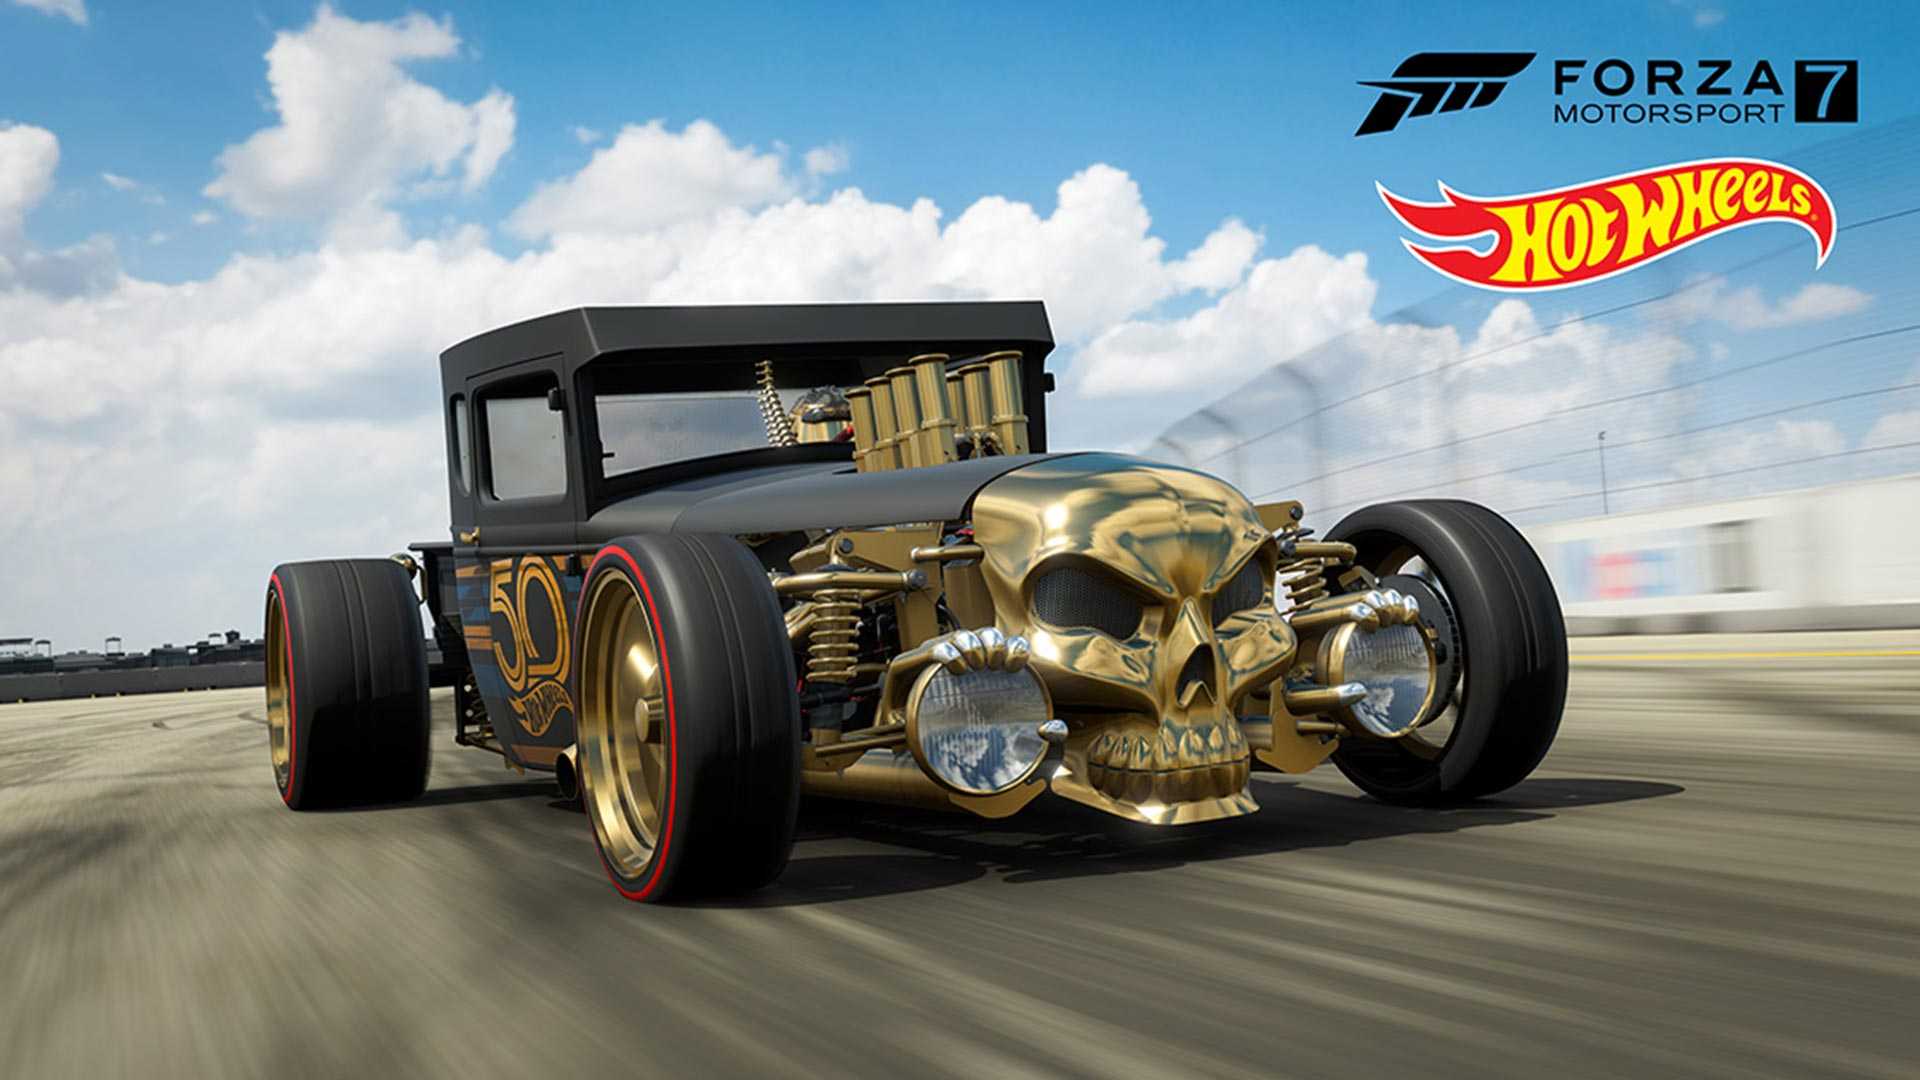 Forza Motorsport 7 Hot Wheels Pack